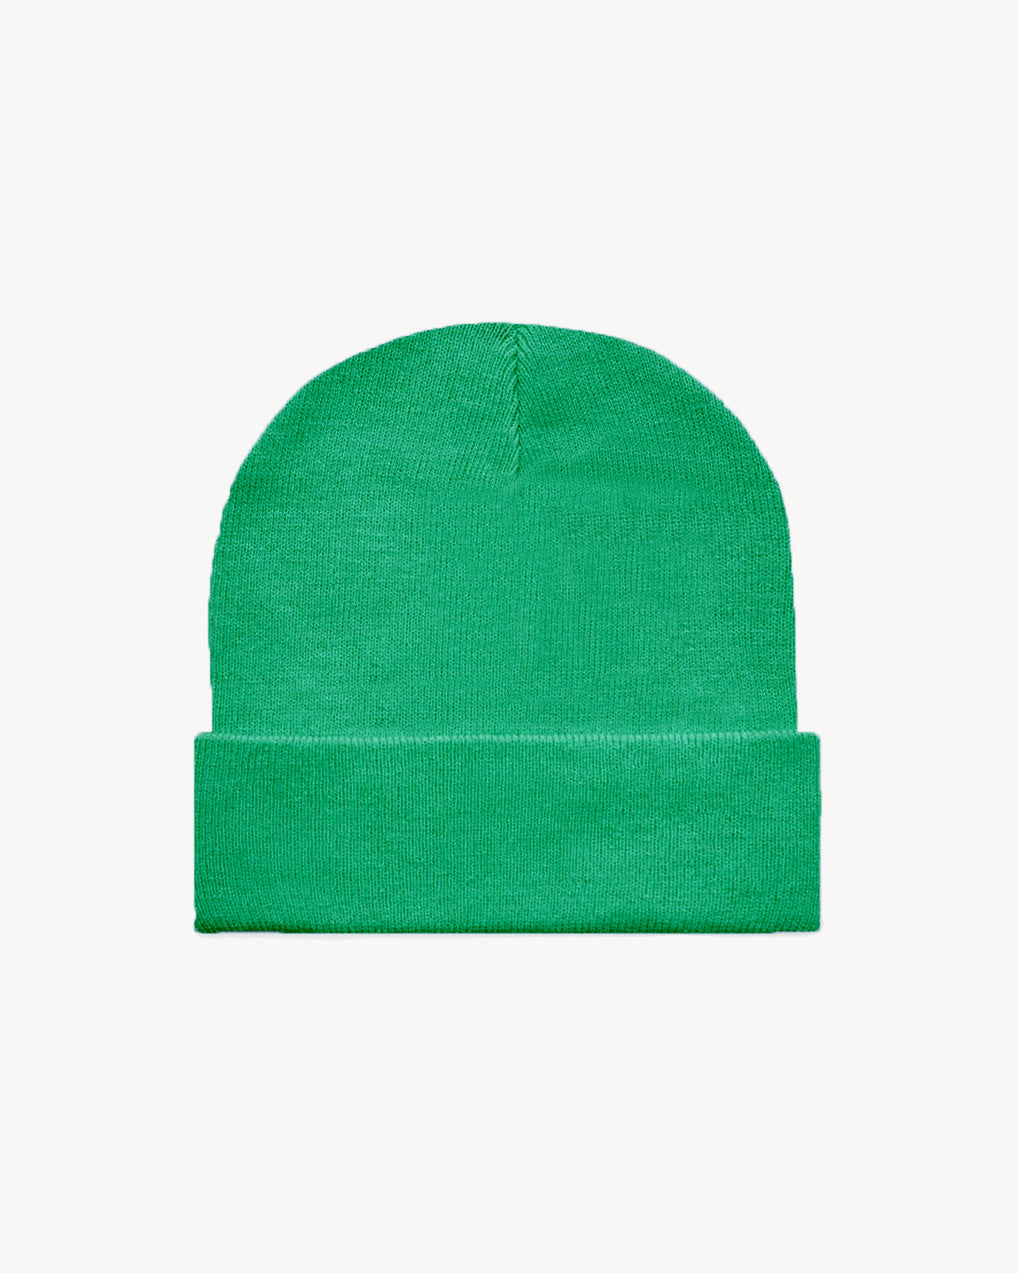 KELLY GREEN HAT | MINI CURLY INITIAL